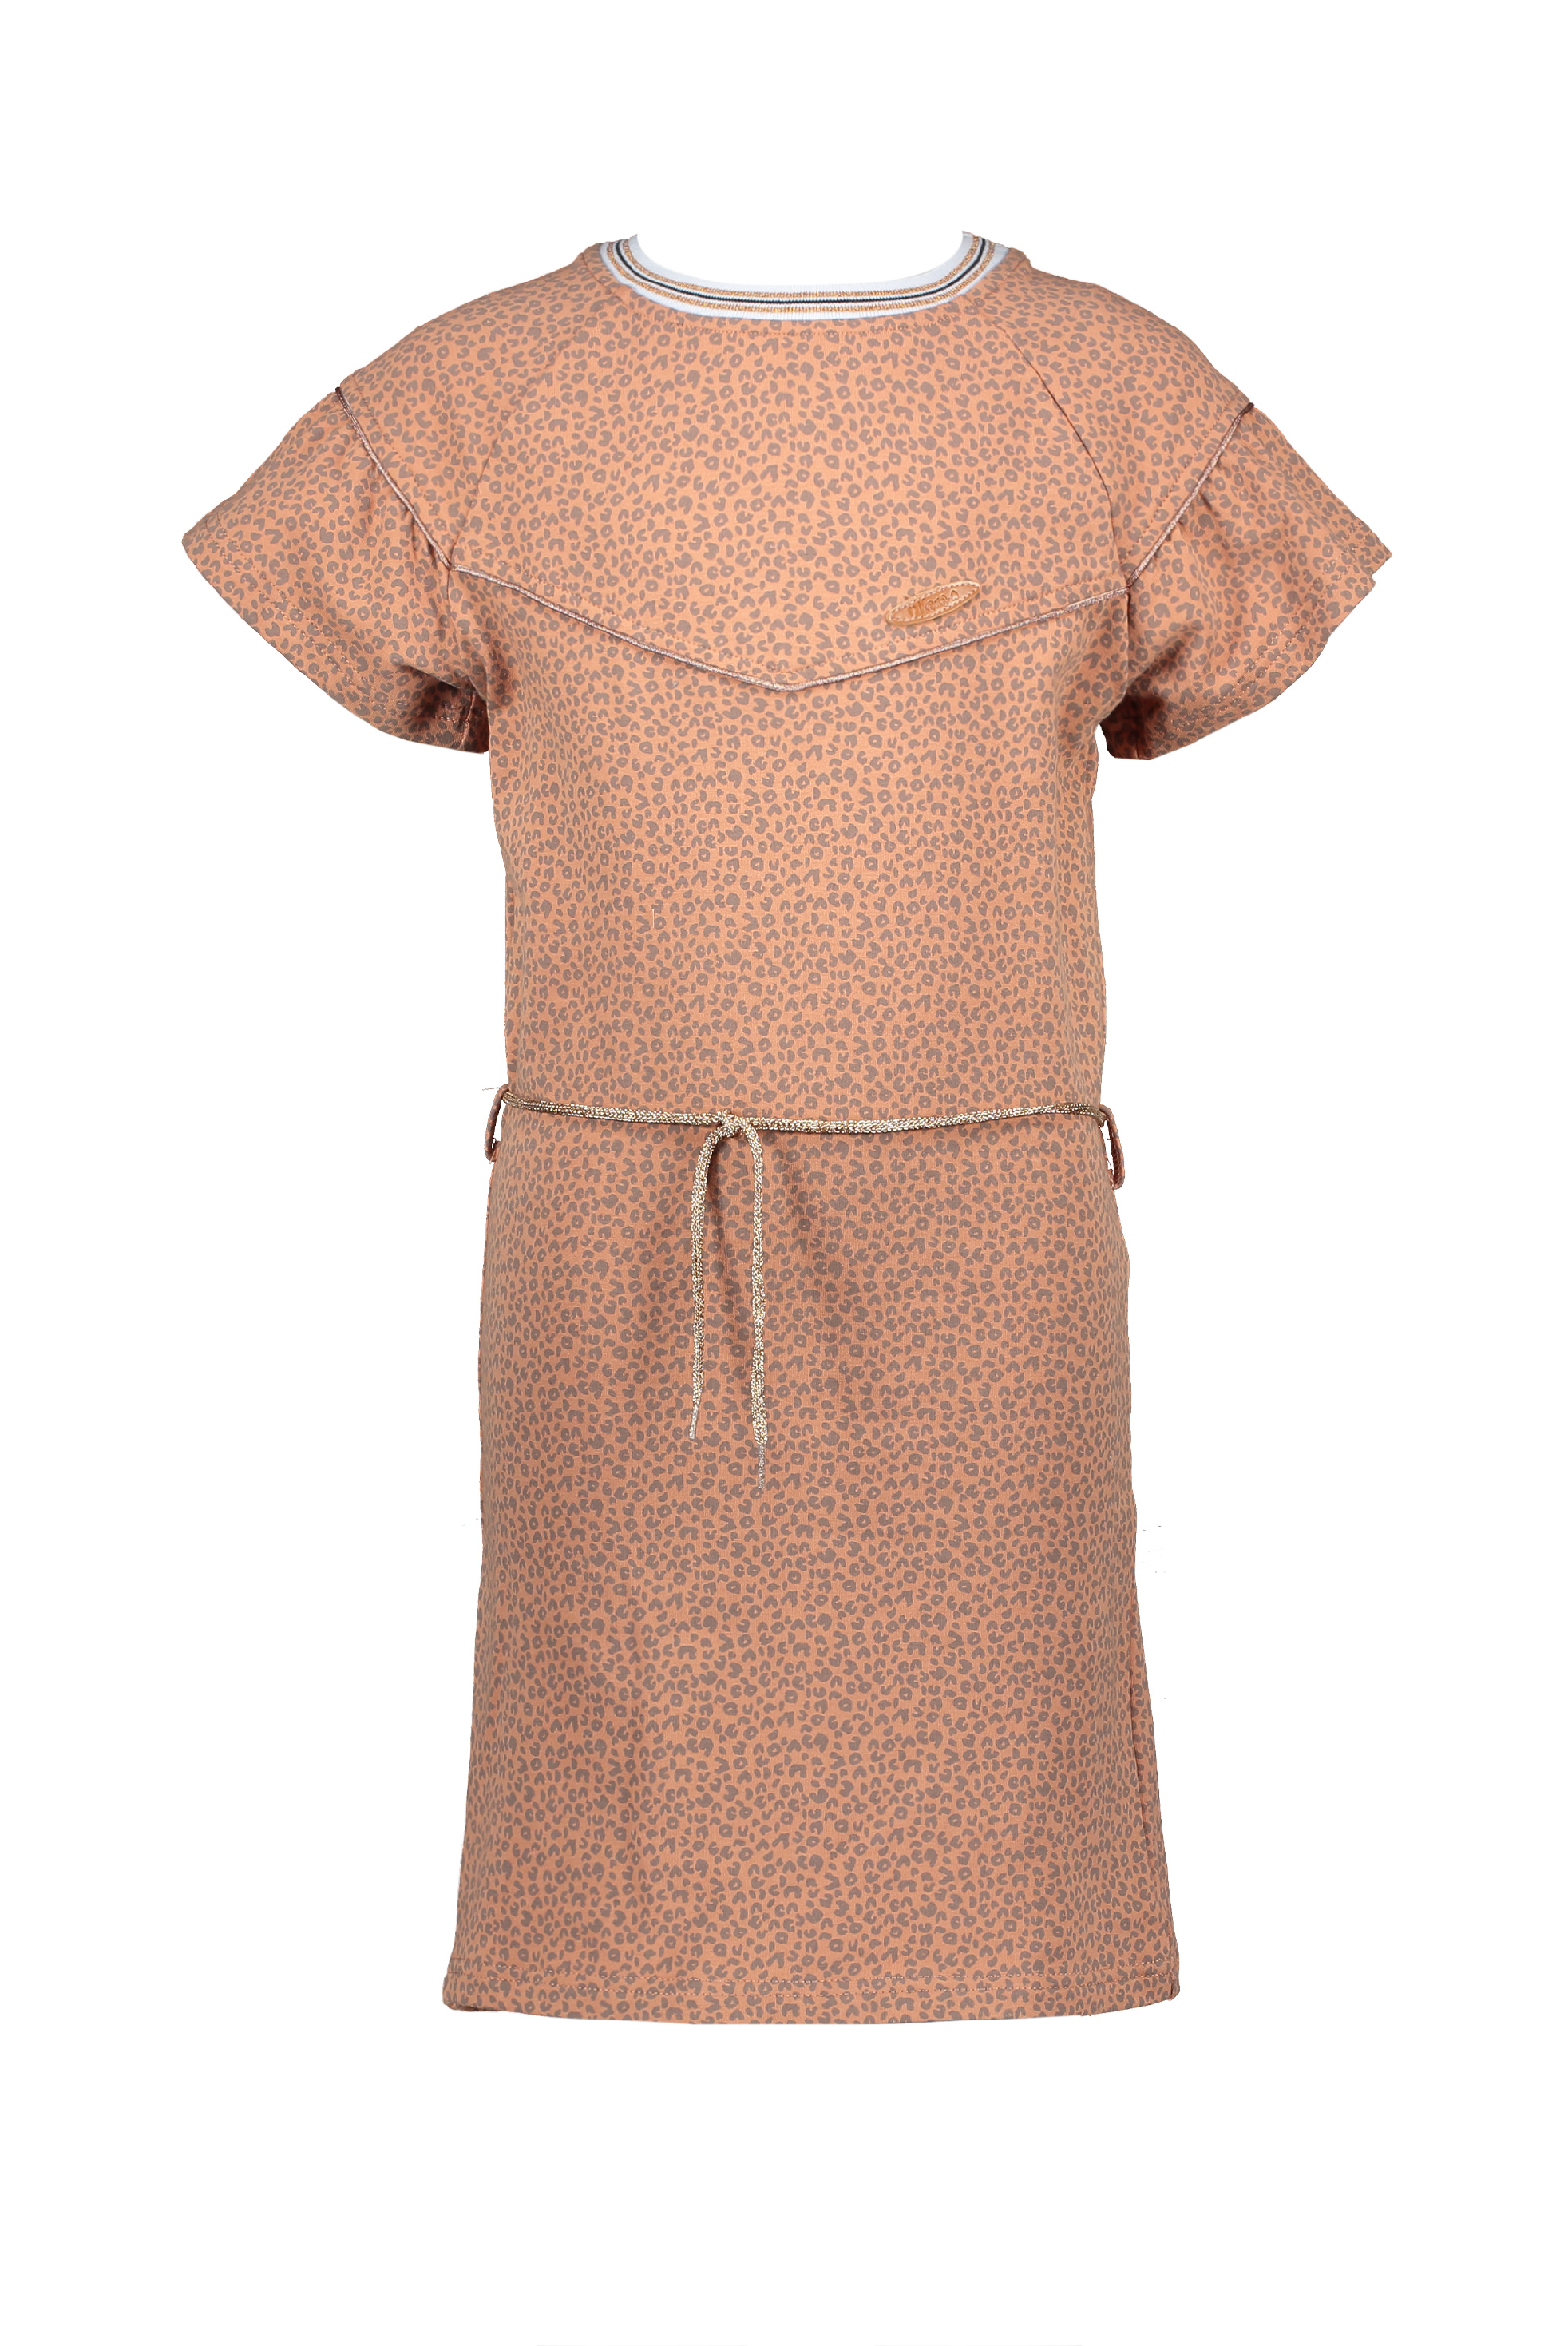 Meisjes Momba ss dress with aop animal  van NoNo in de kleur Hazelnut in maat 146, 152.